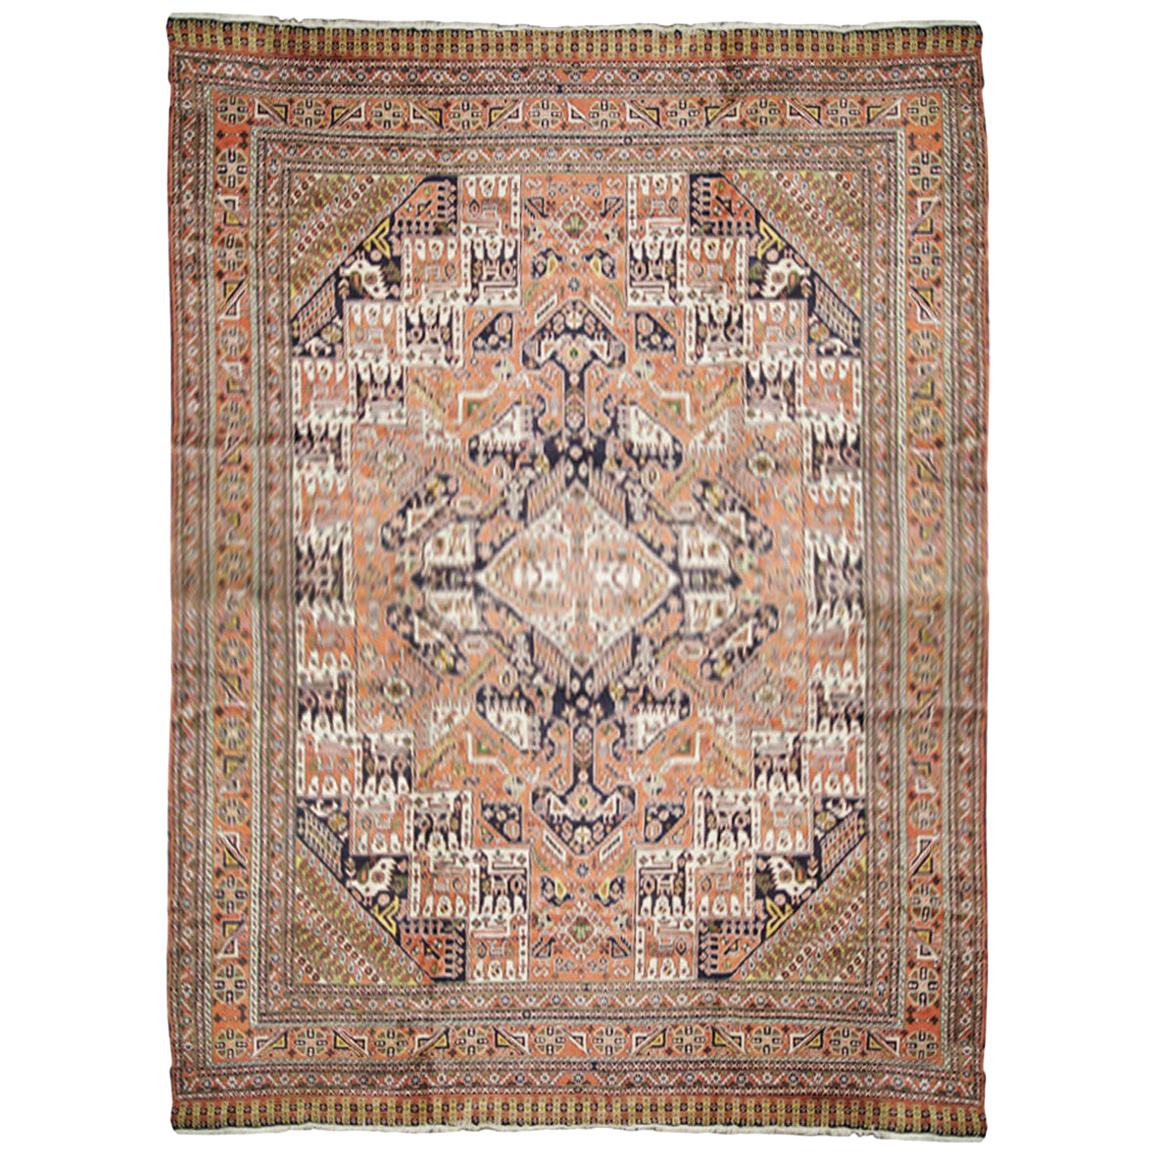 Traditional Afghan Tribal Large Area Rug, Handmade Multicolored Wool Carpet